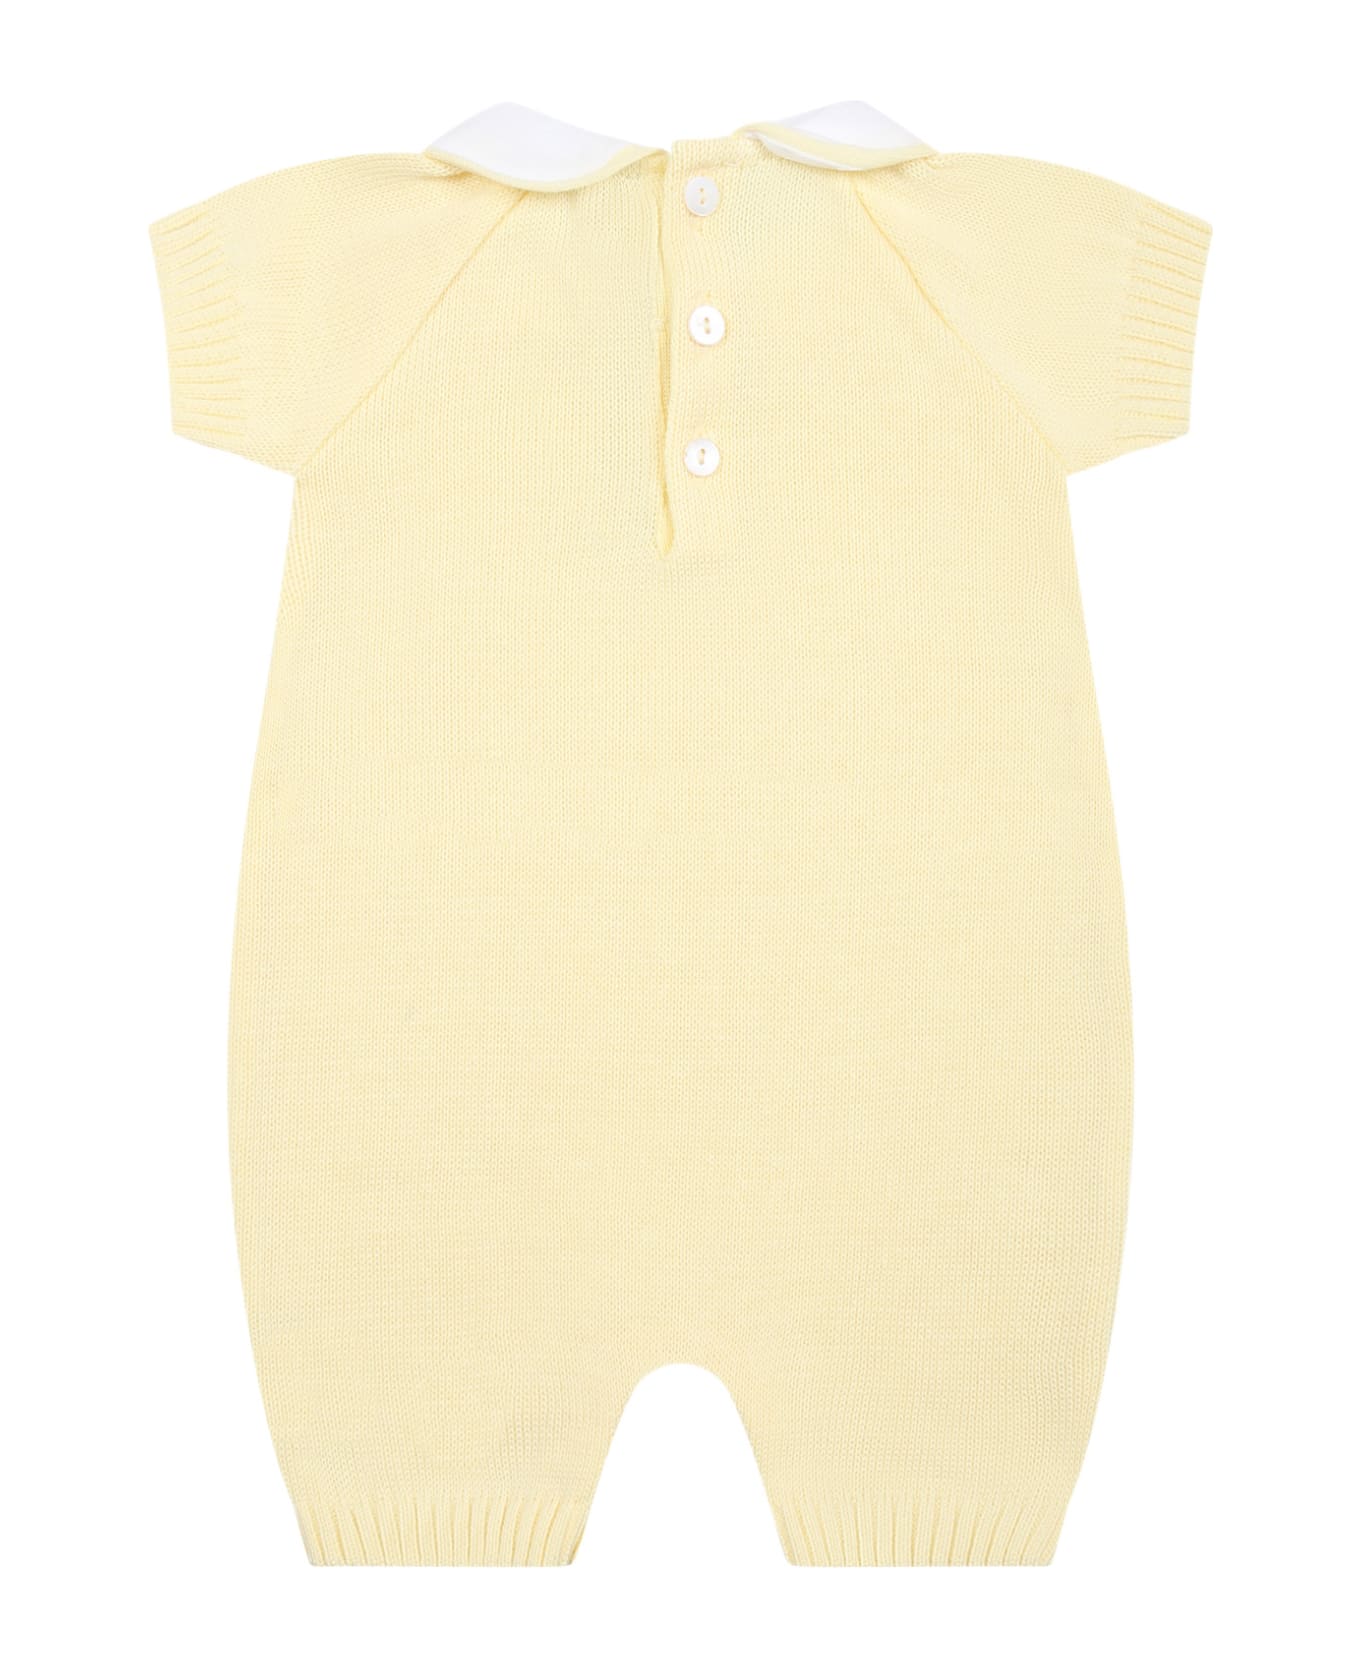 Little Bear Yellow Romper For Baby Kids - Yellow